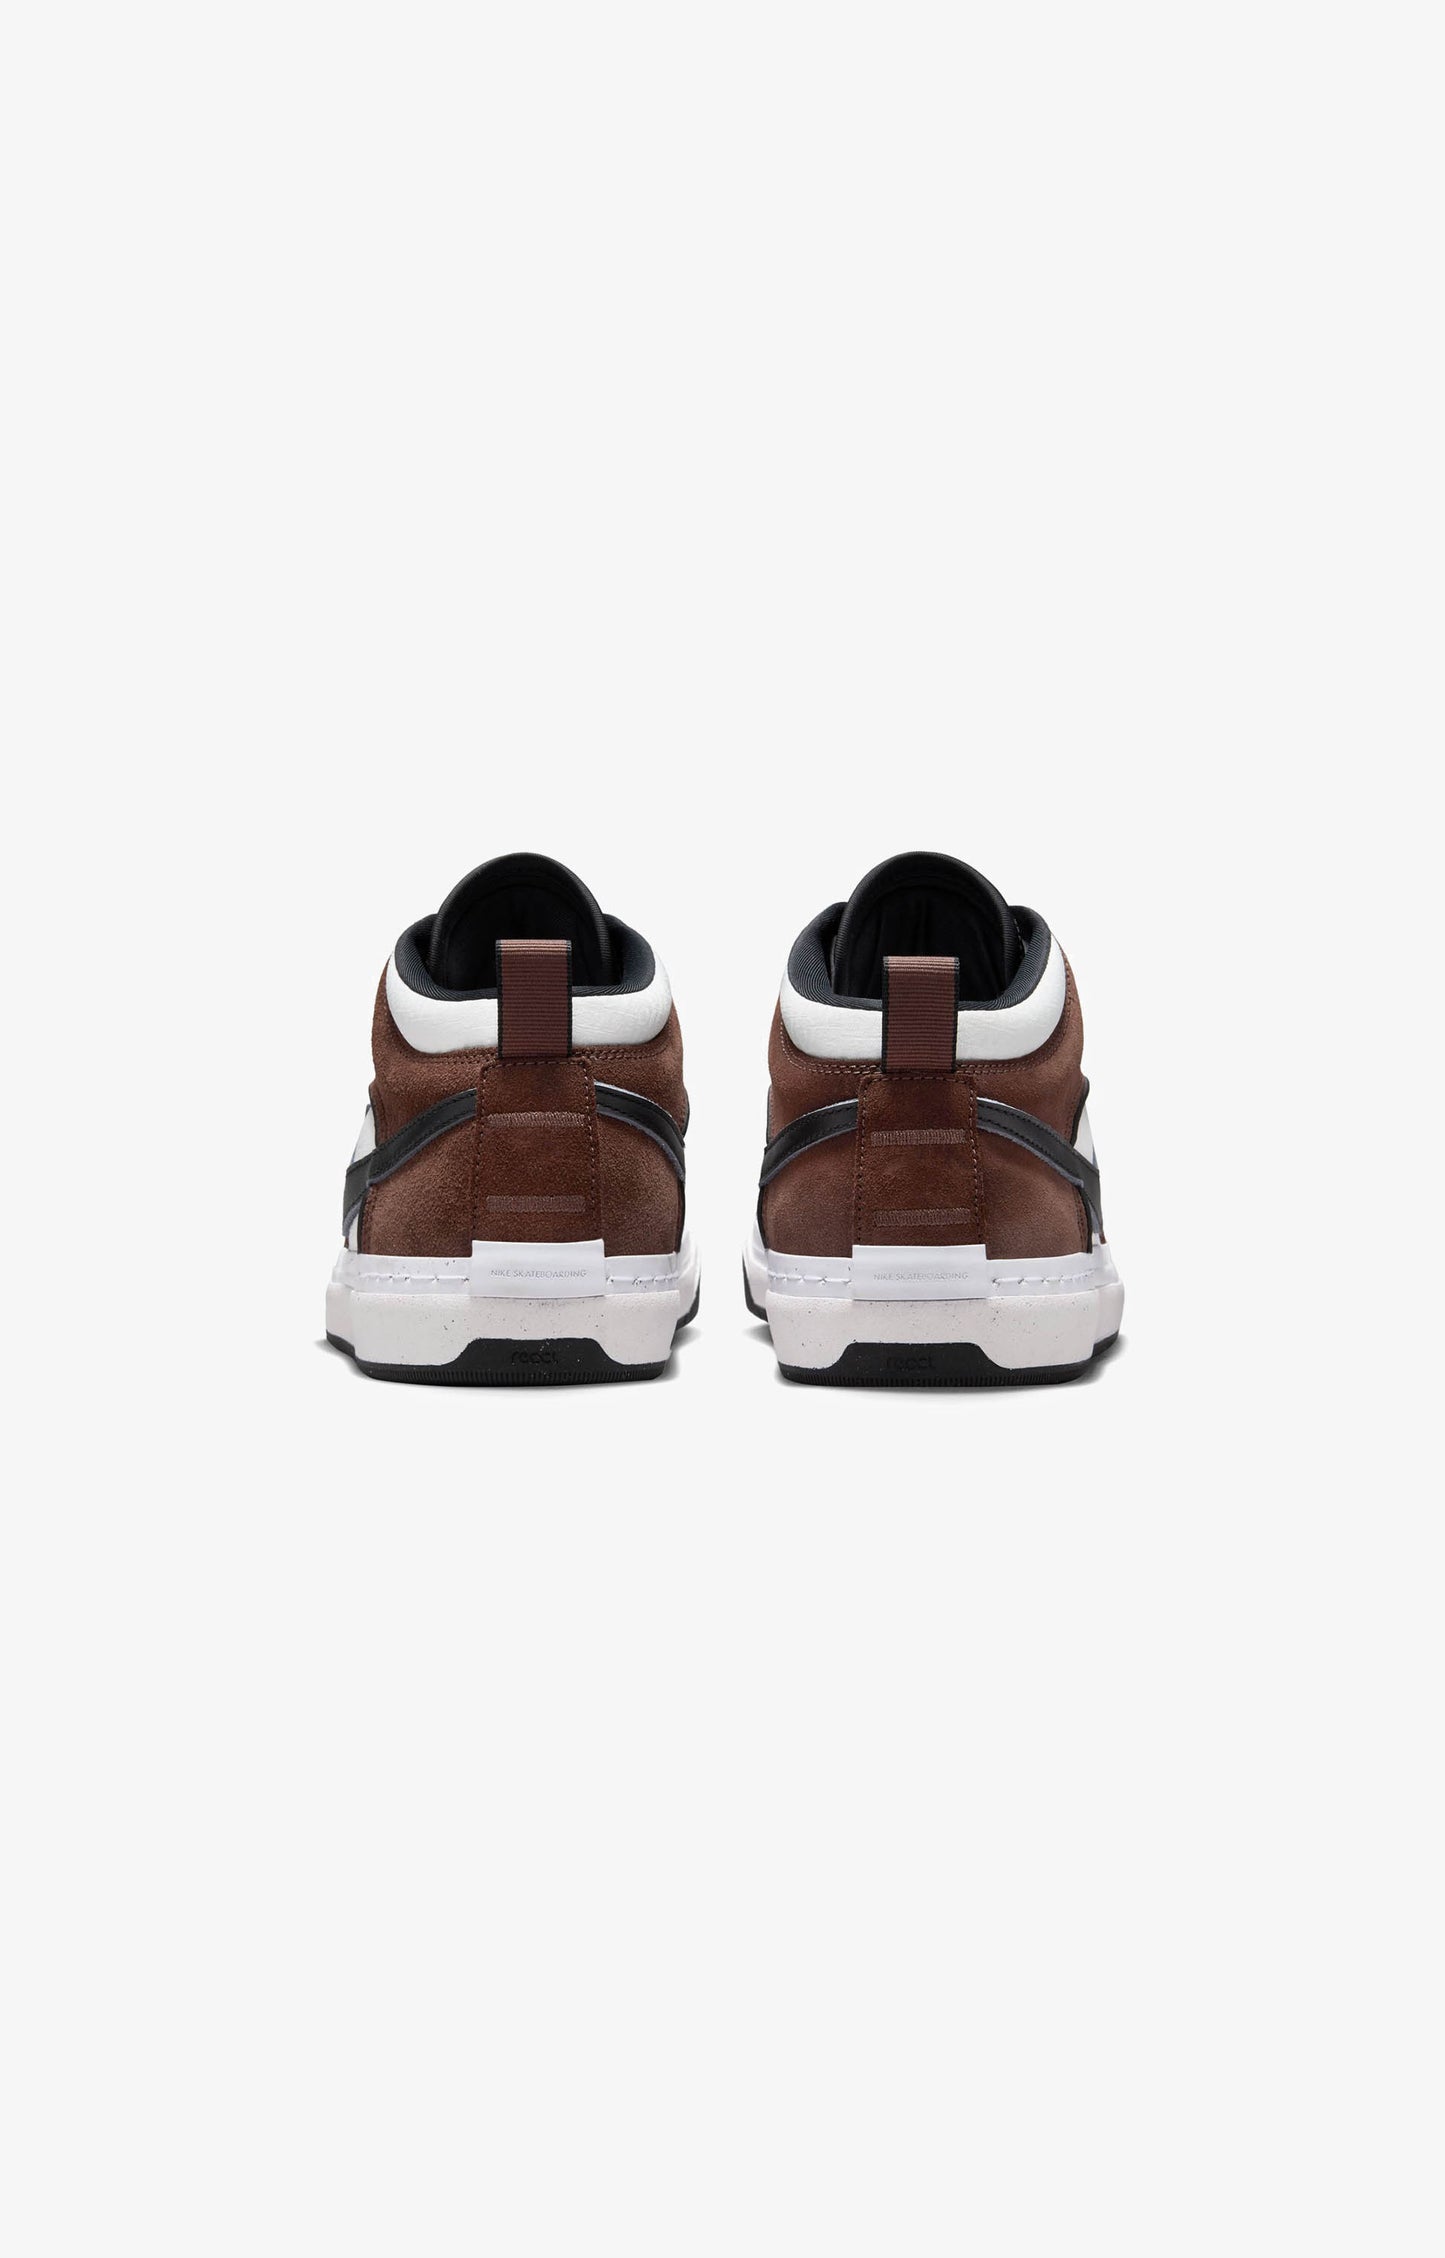 Nike SB React Leo Shoe, Chocolate/Black